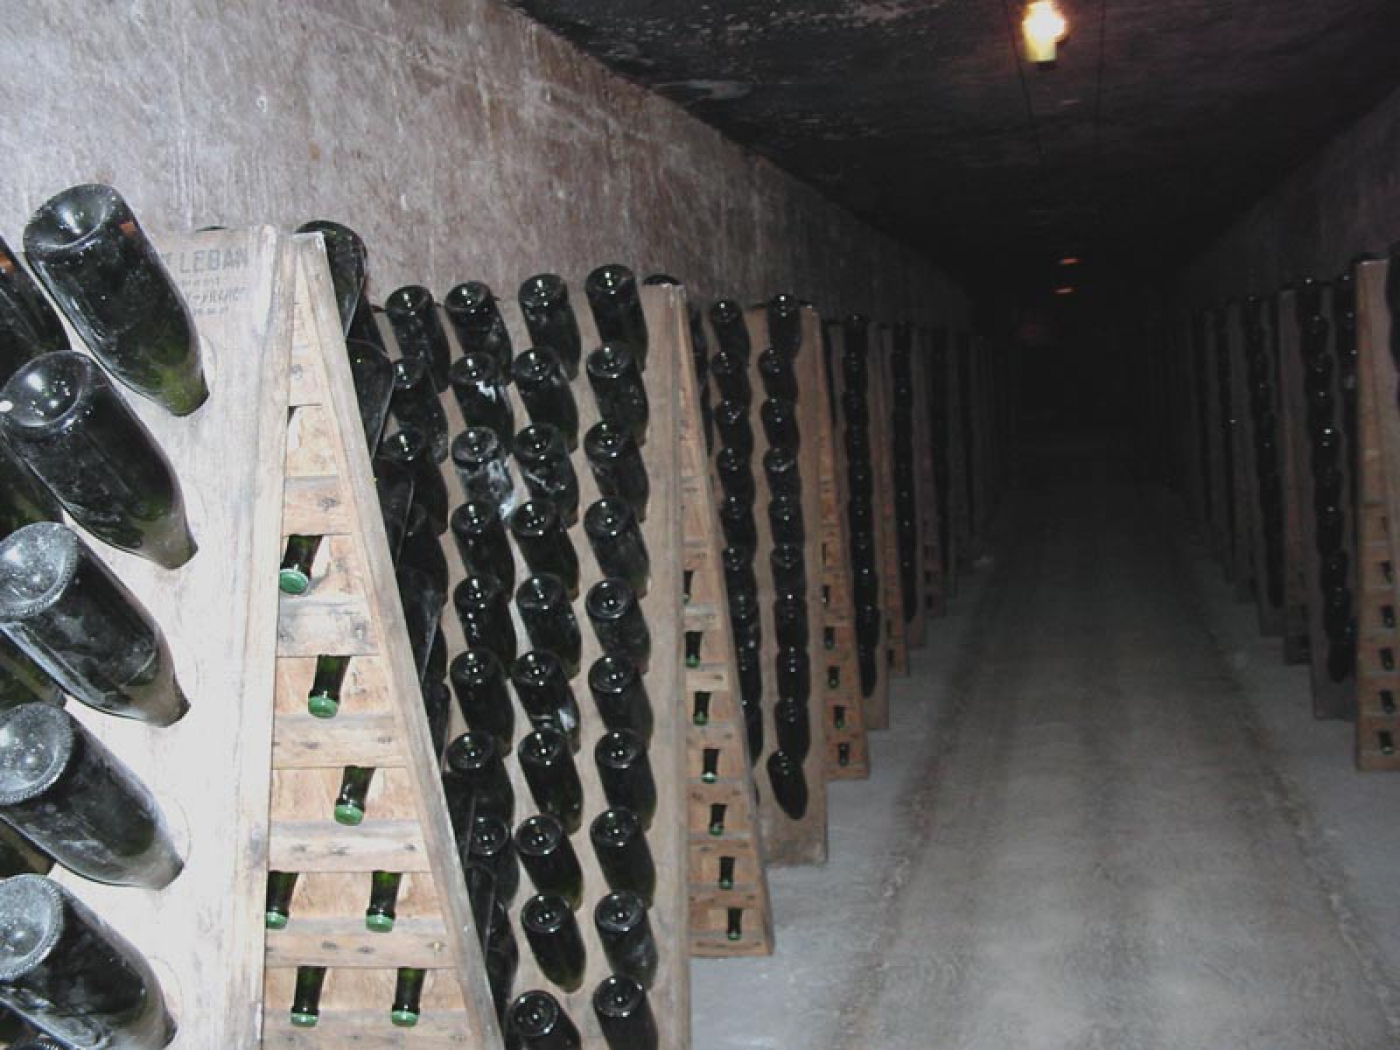 Old riddling rack, wine rack, with 120 bottle holes  